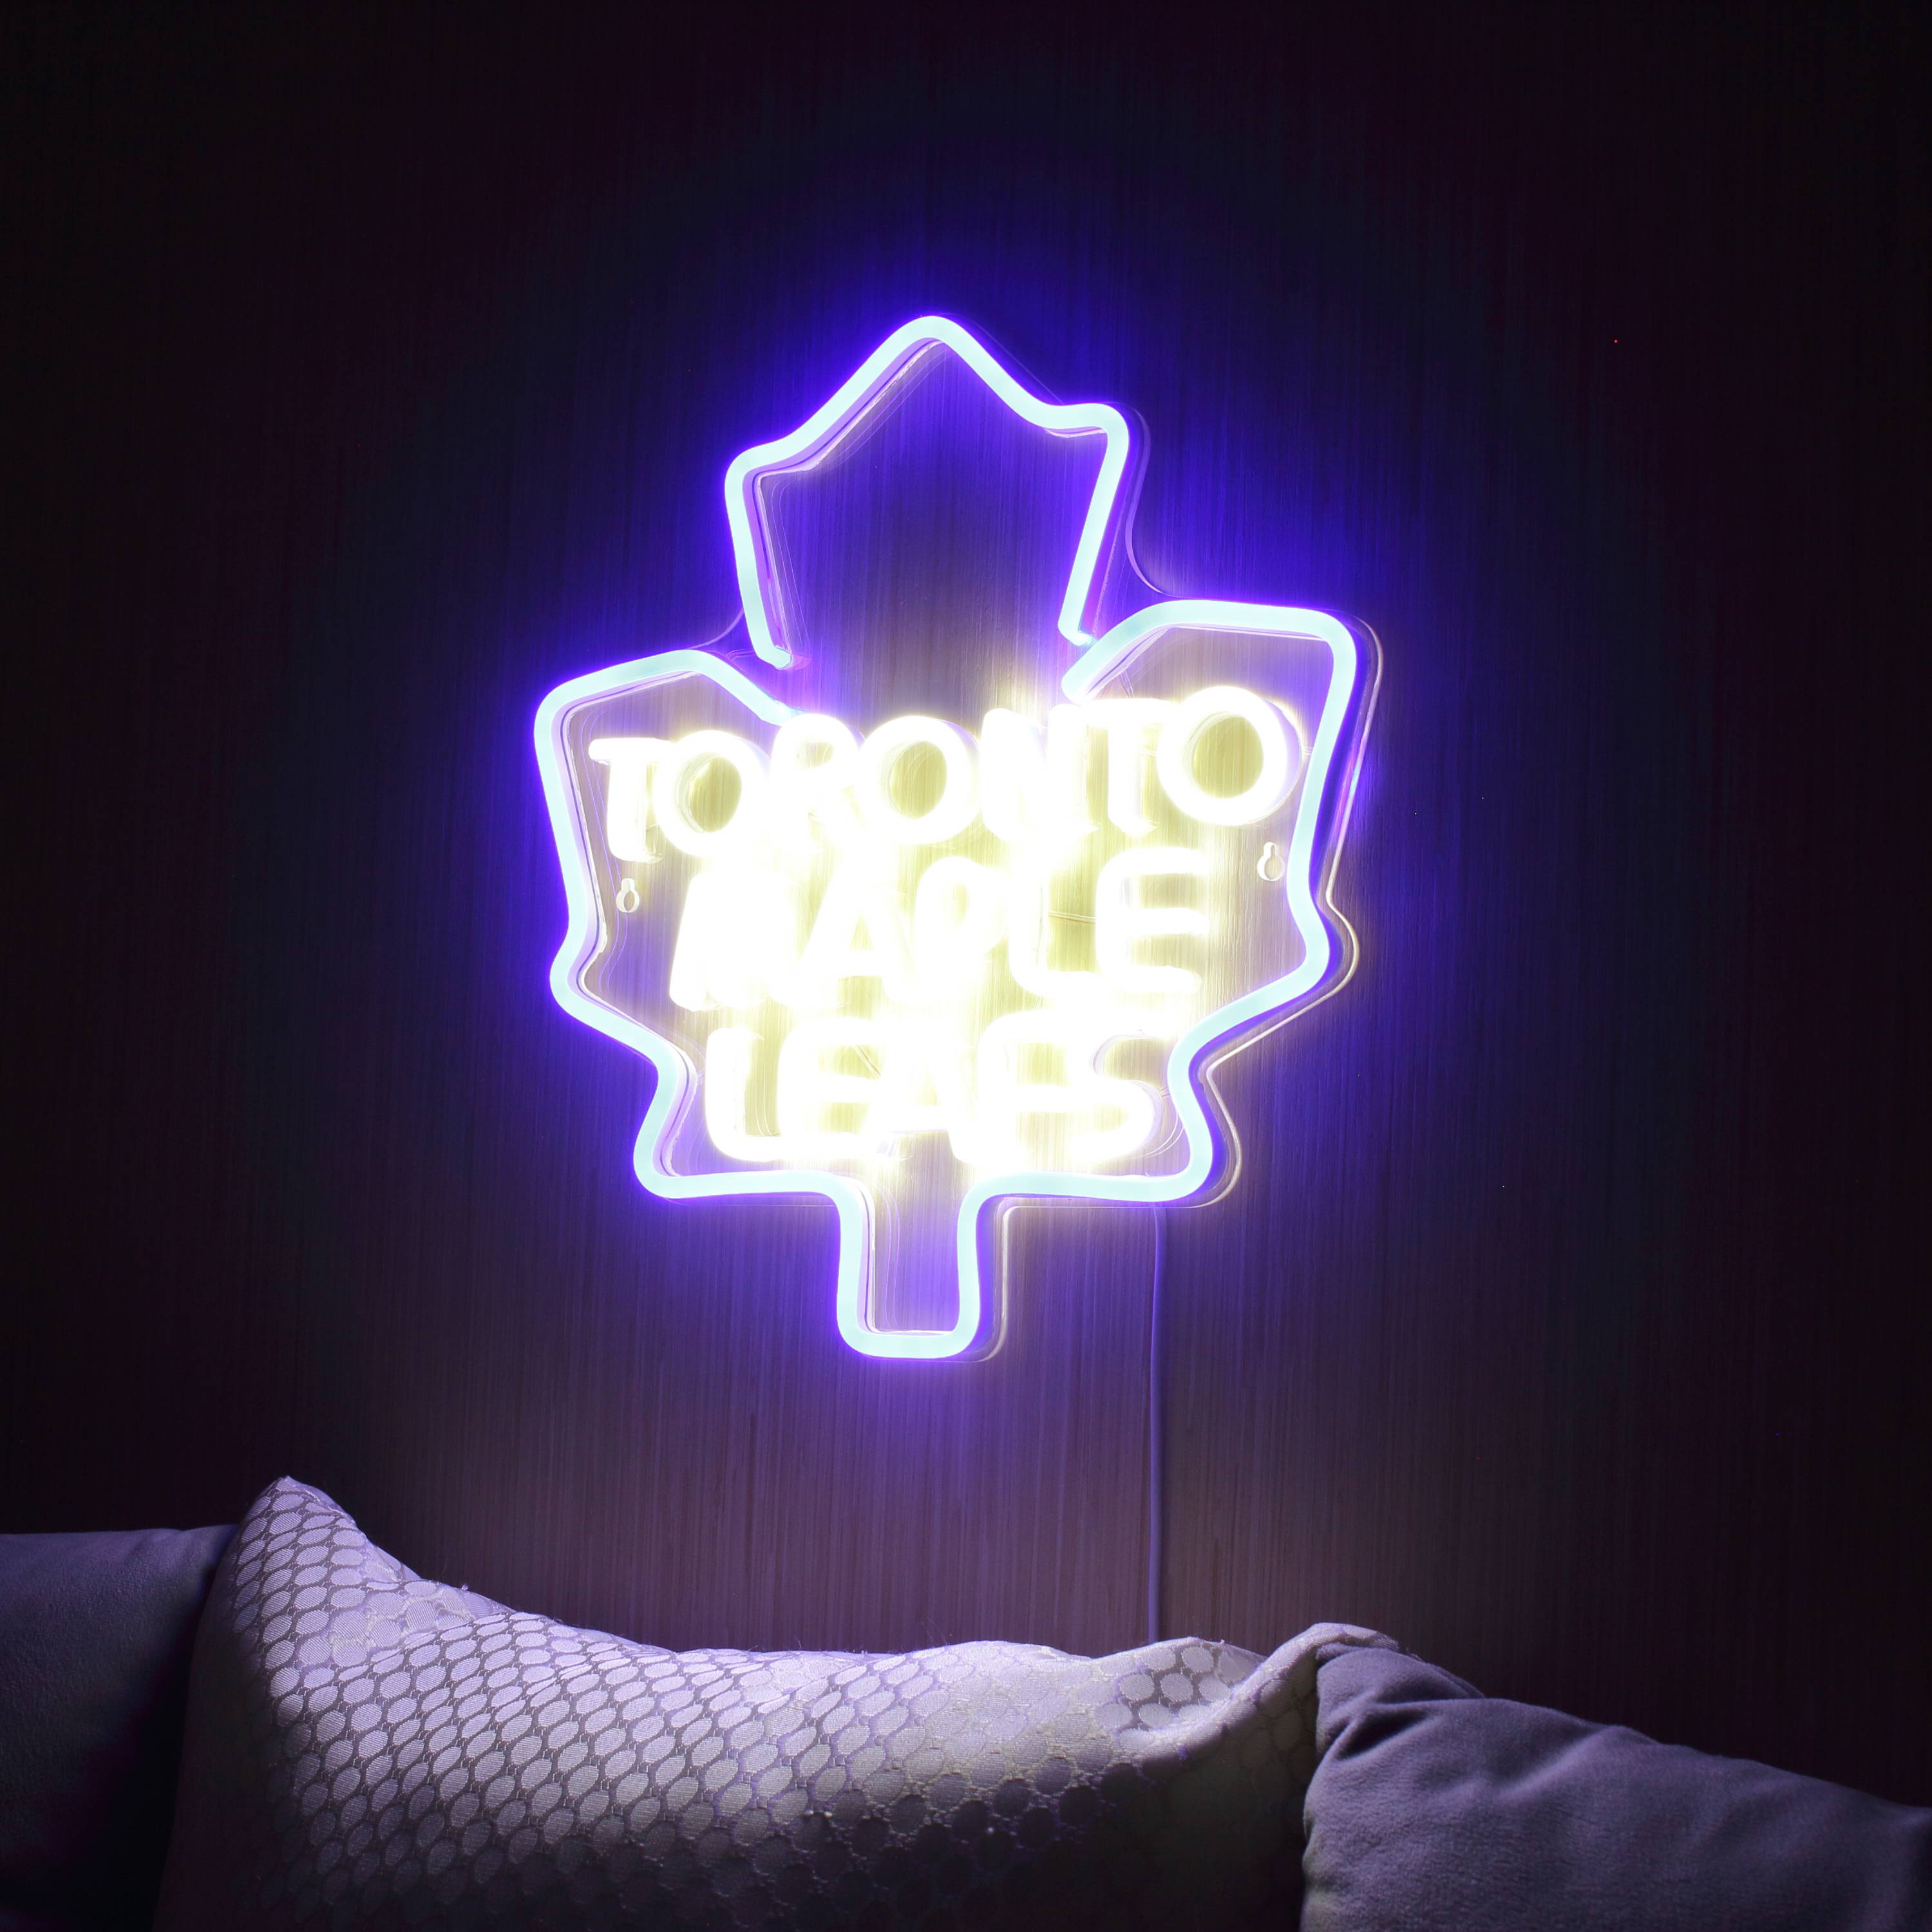 NHL Toronto Maple Leafs Large Flex Neon LED Sign